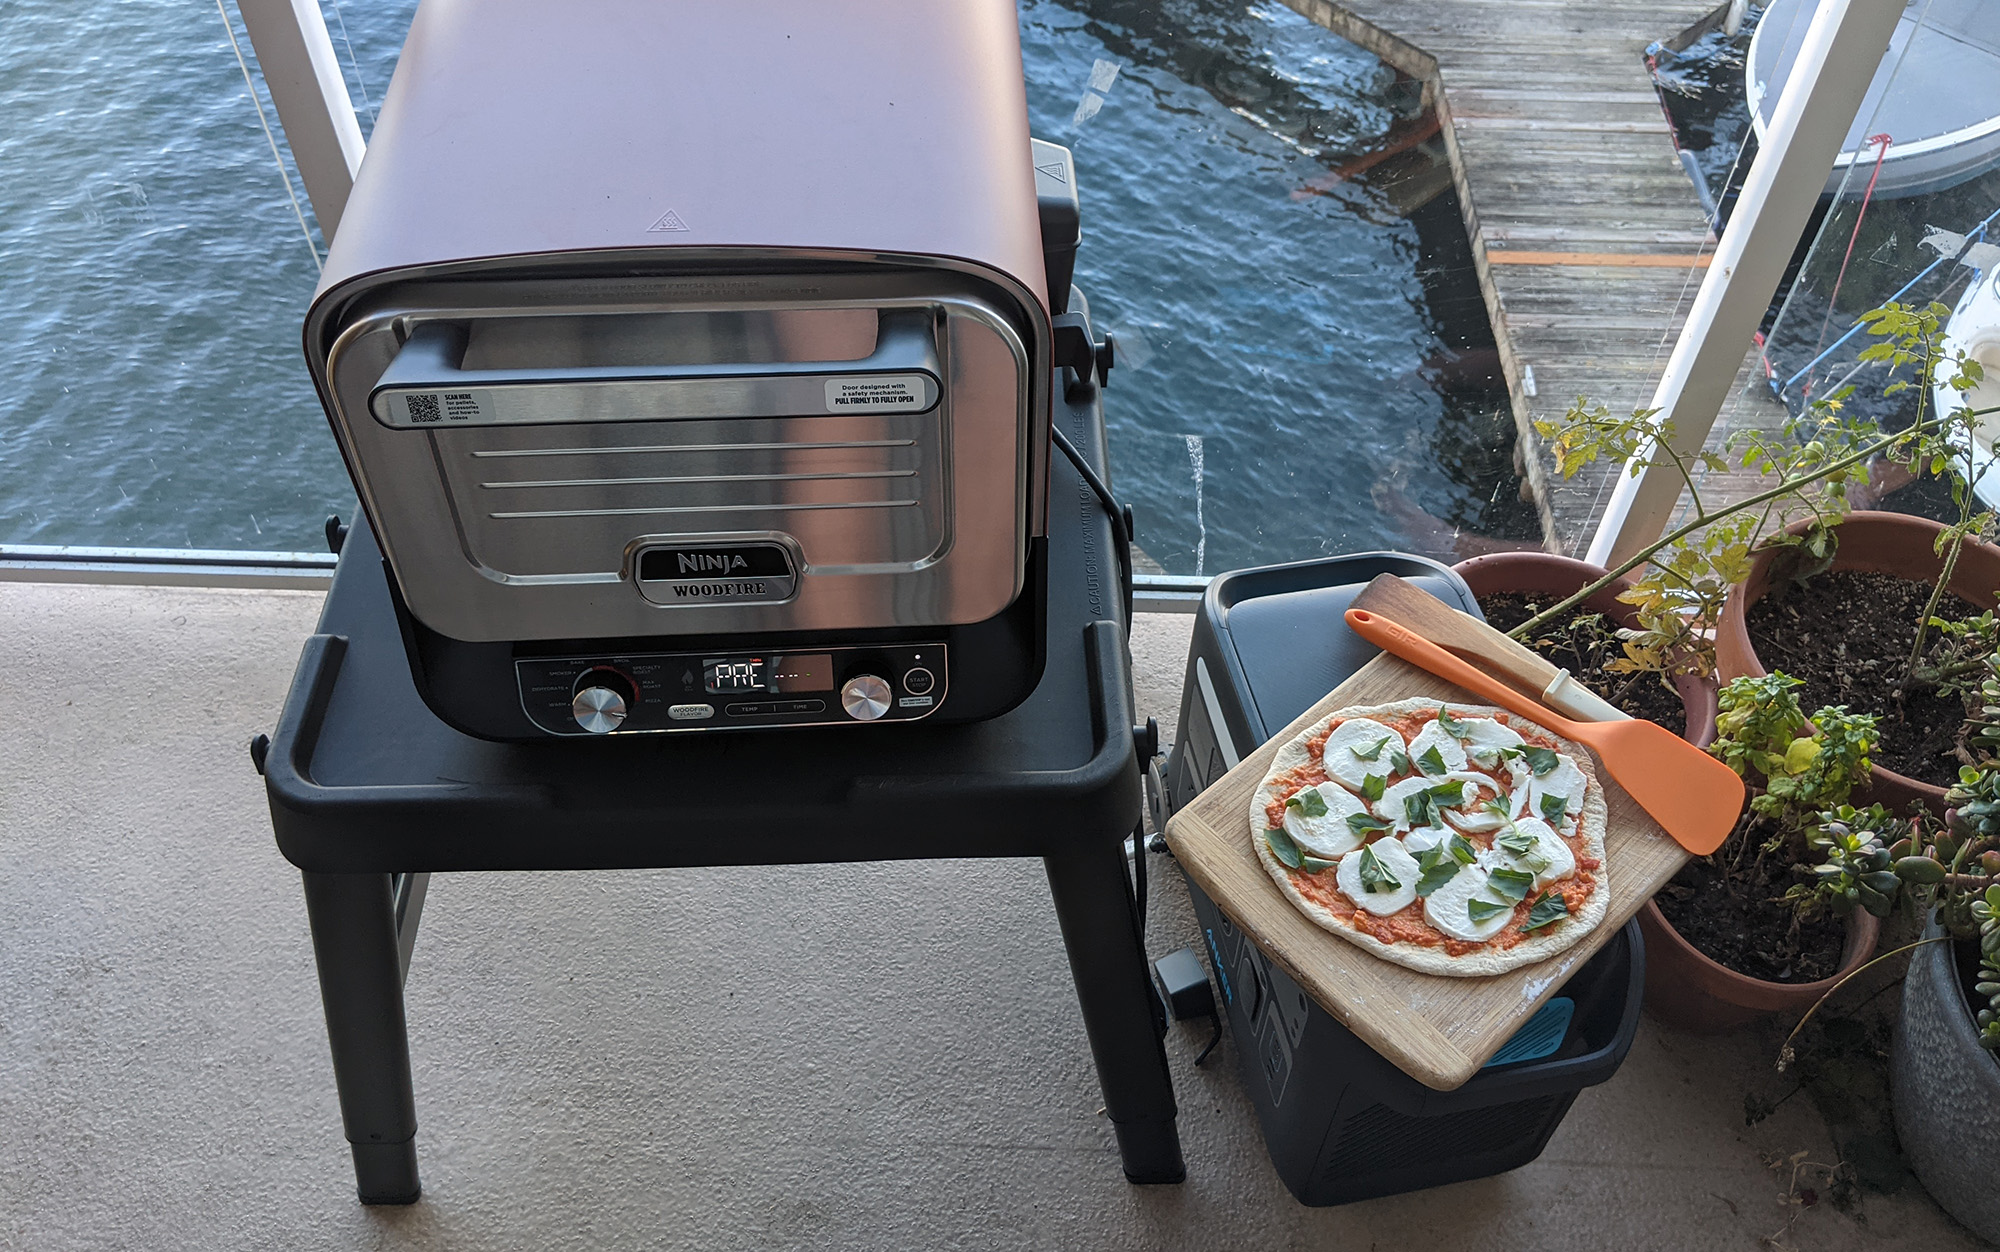 Ninja Woodfire Outdoor Oven review